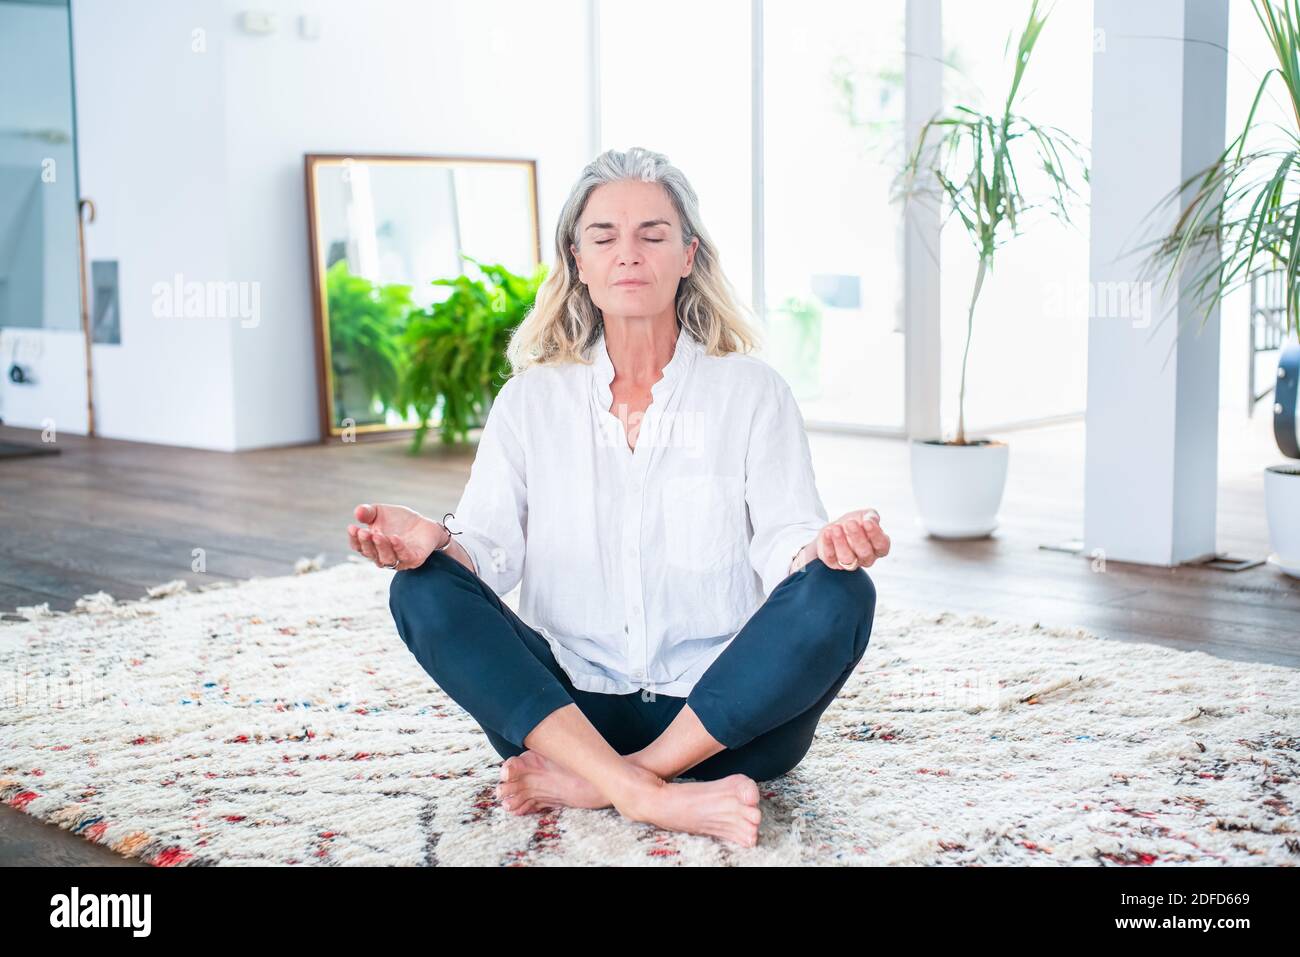 Frau Yoga zu praktizieren. Stockfoto